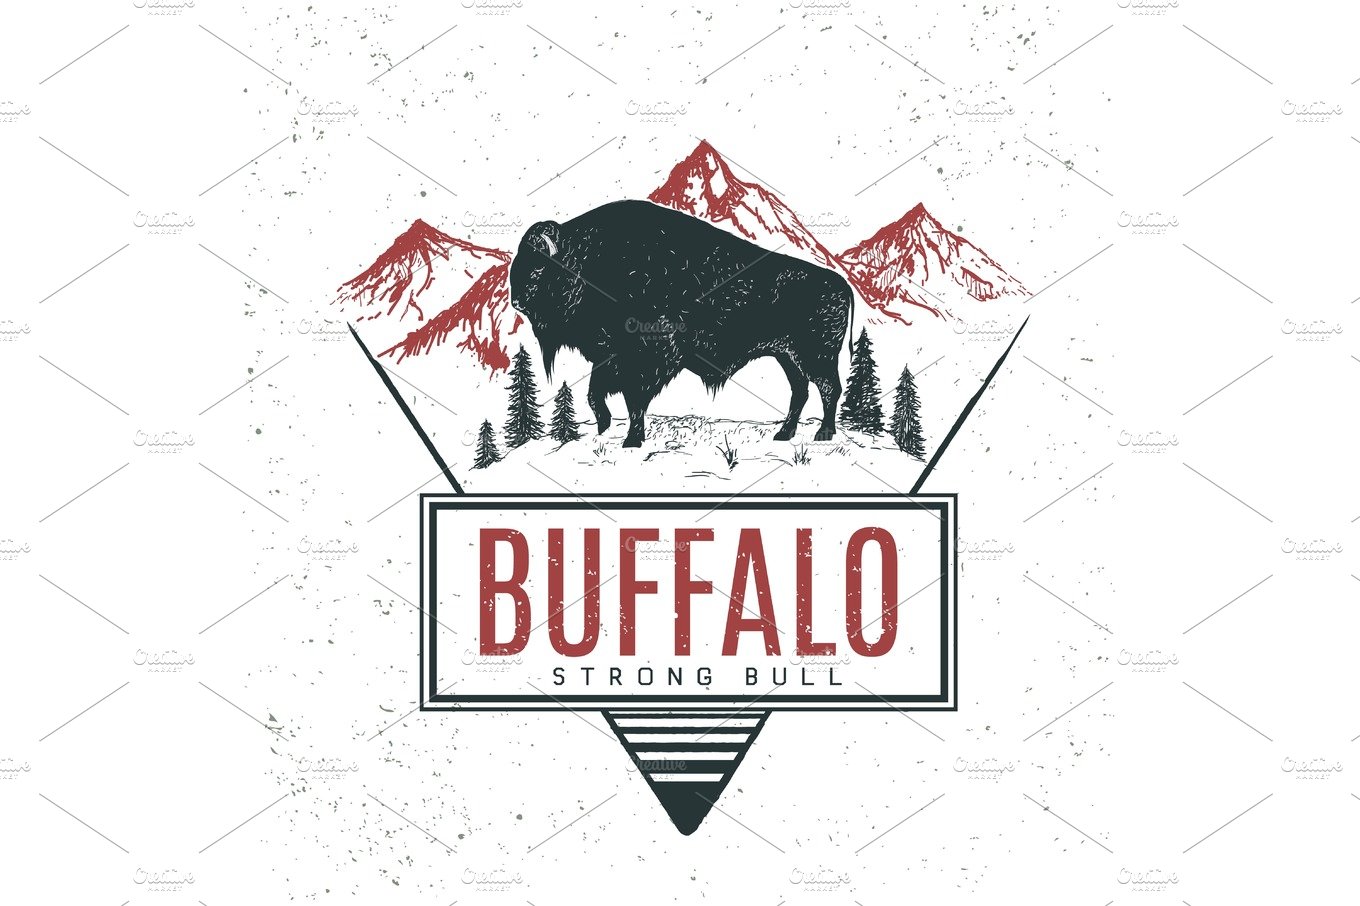 Old retro logo with bull buffalo cover image.